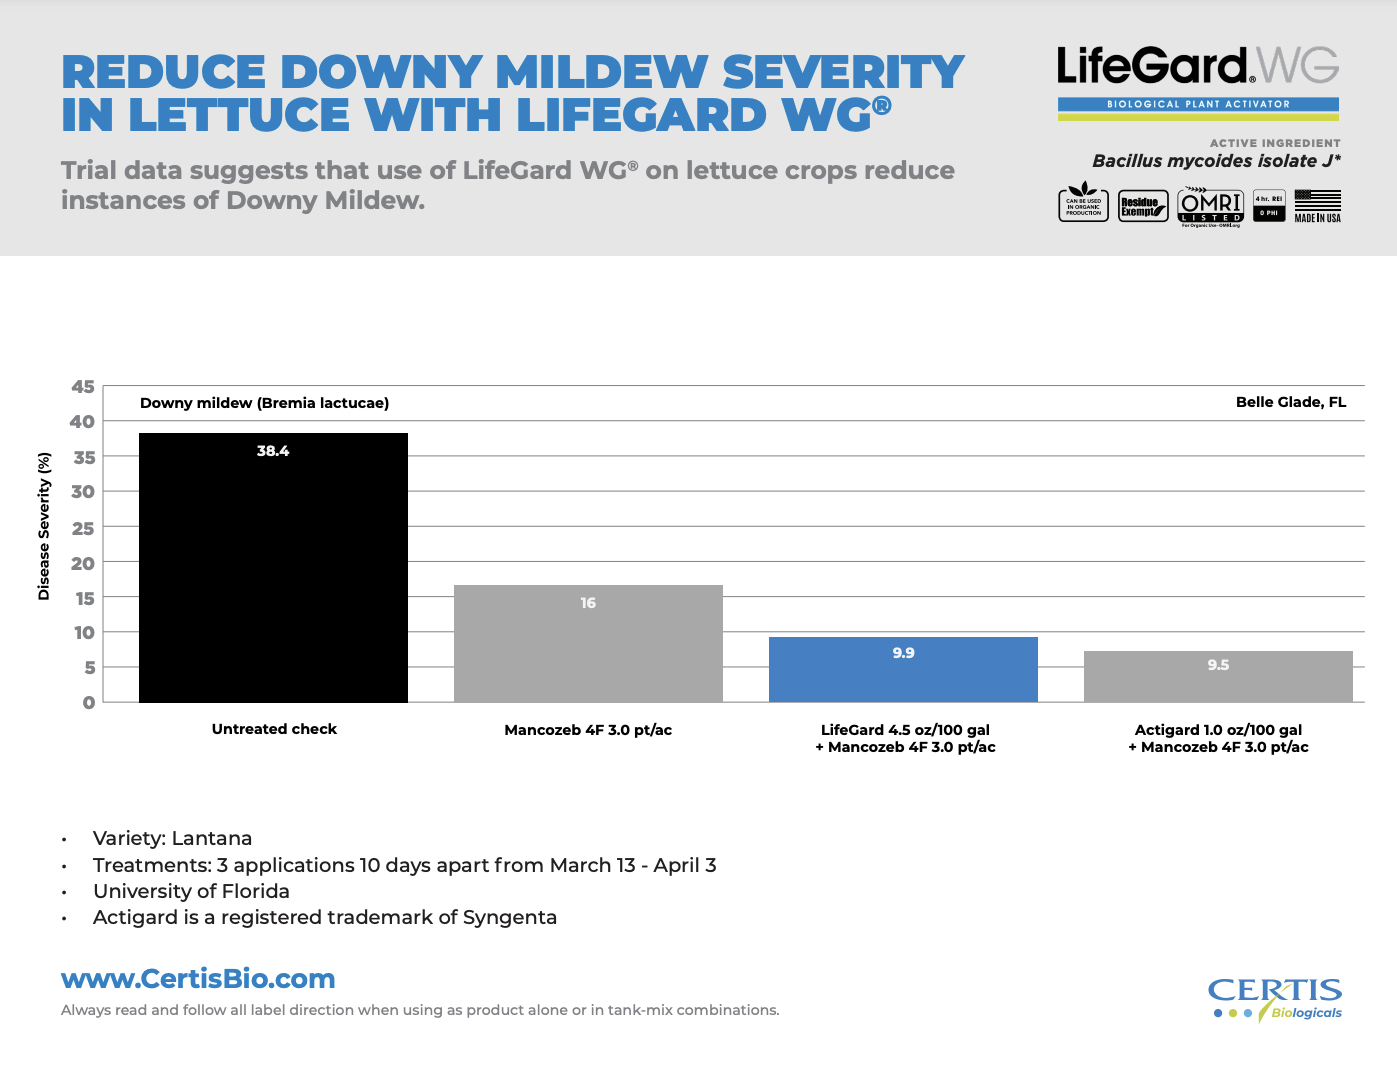 Downy Mildew in Lettuce Trail Data